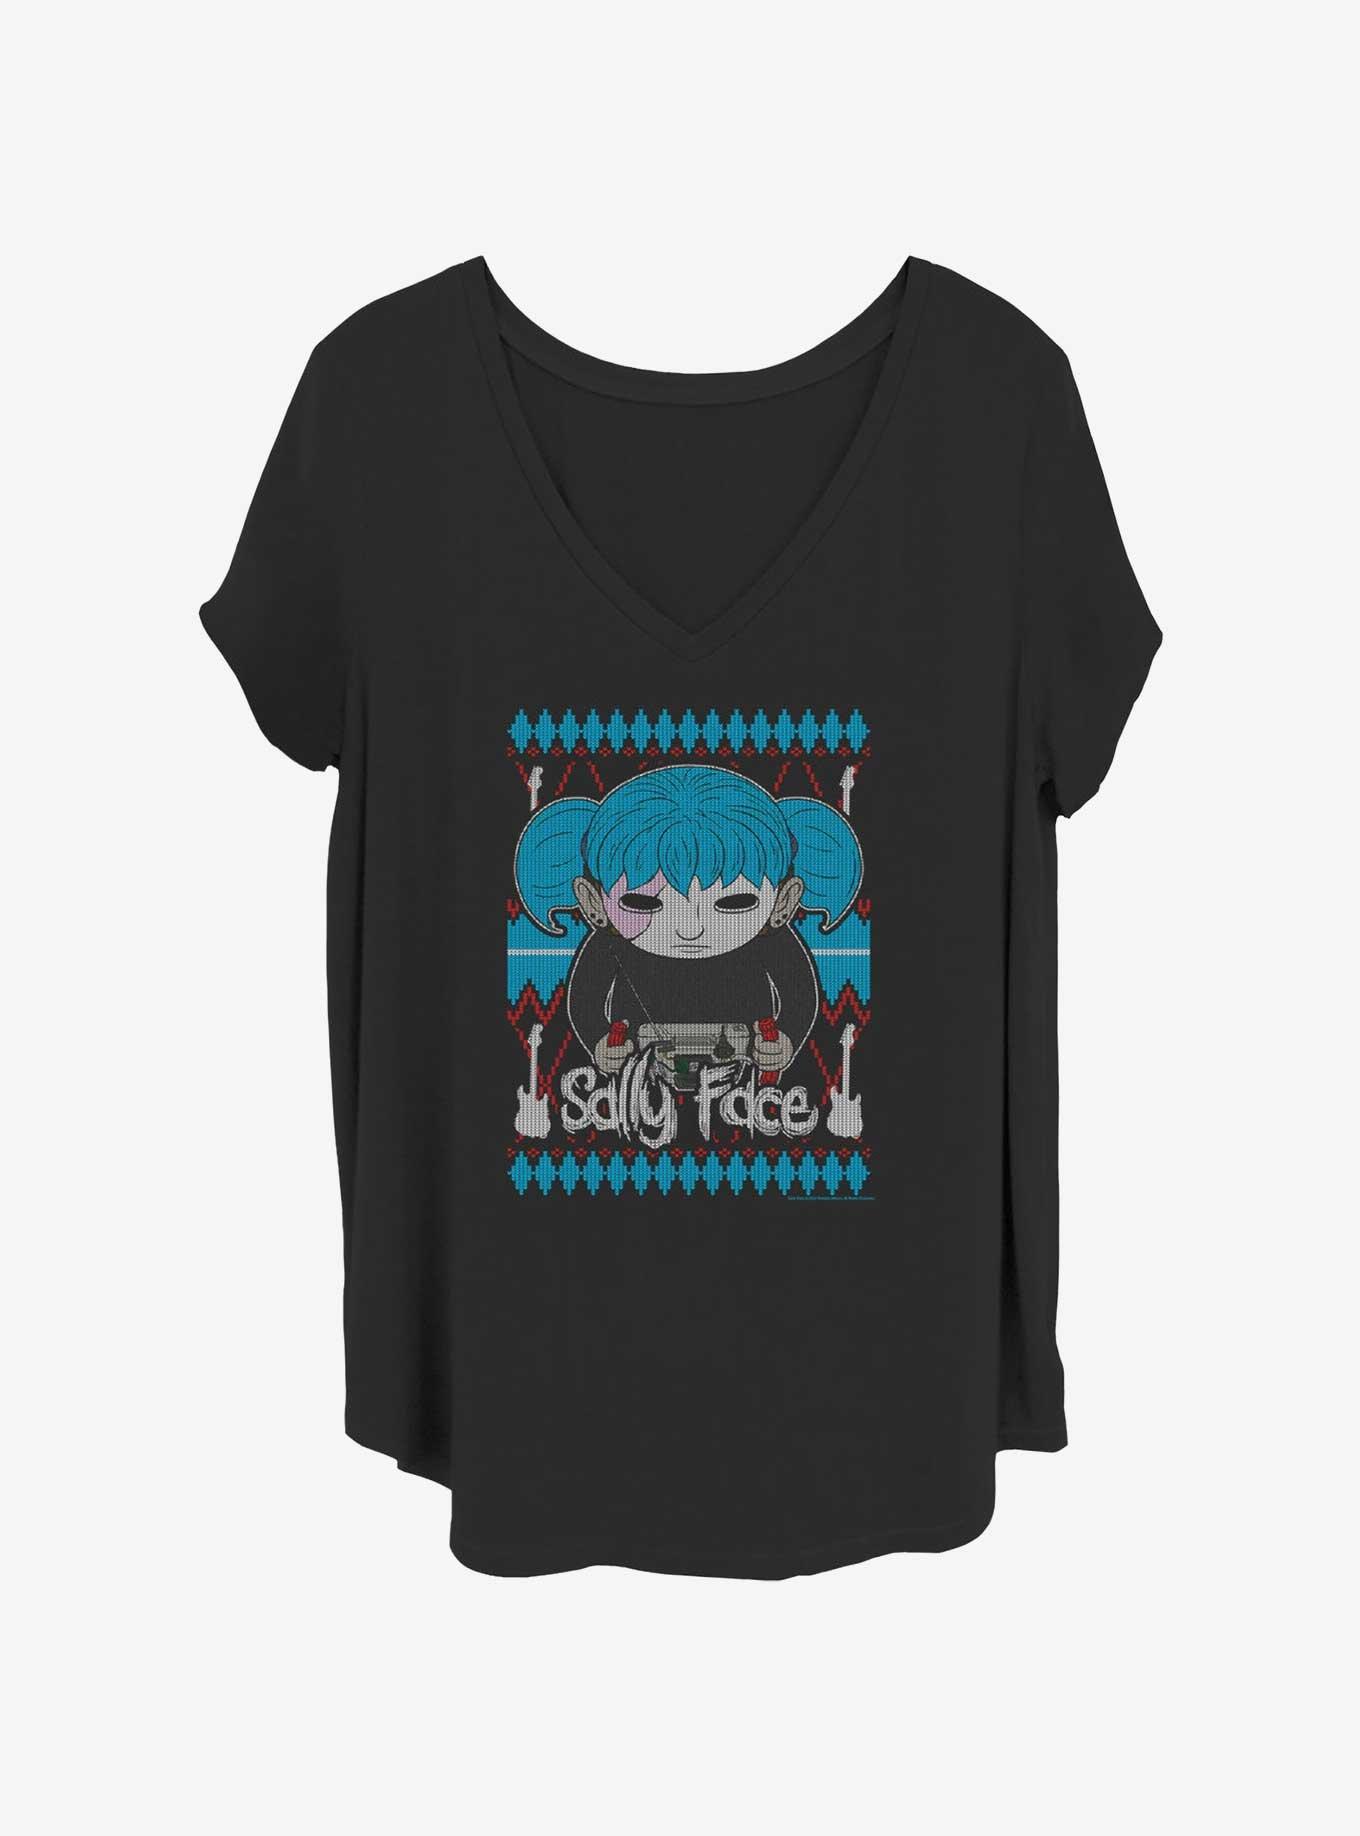 Sally Face Sweater Girls T-Shirt Plus